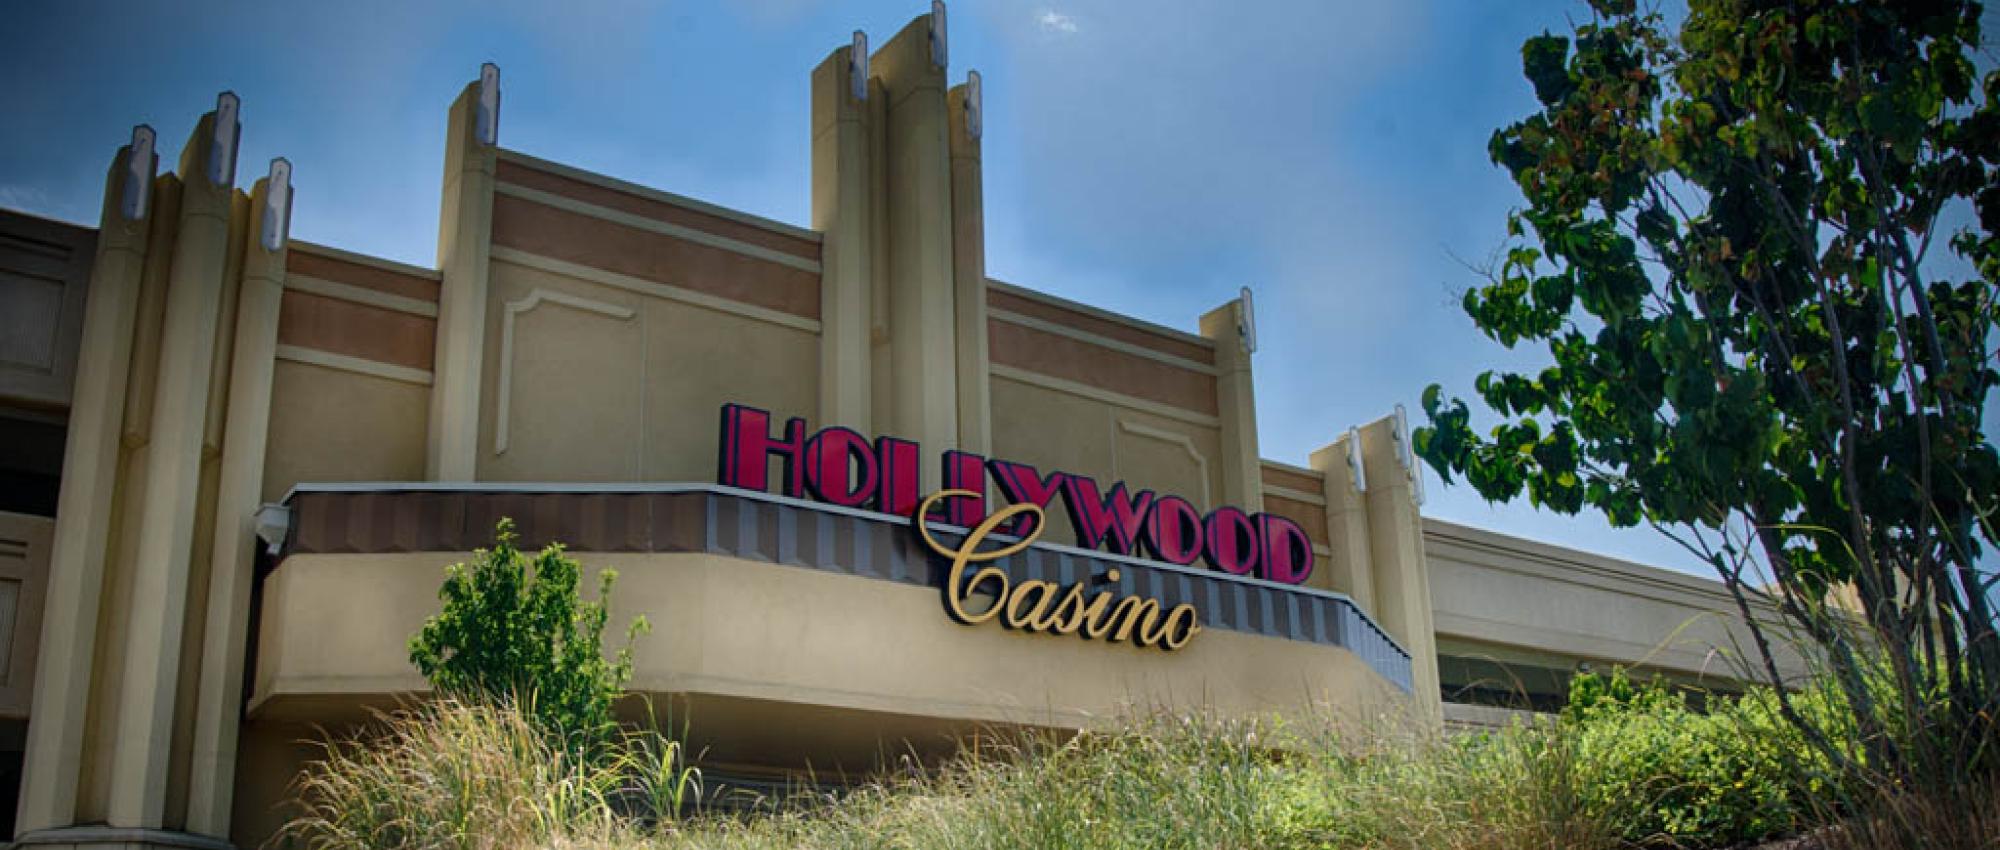 hollywood casino aurora illinois career